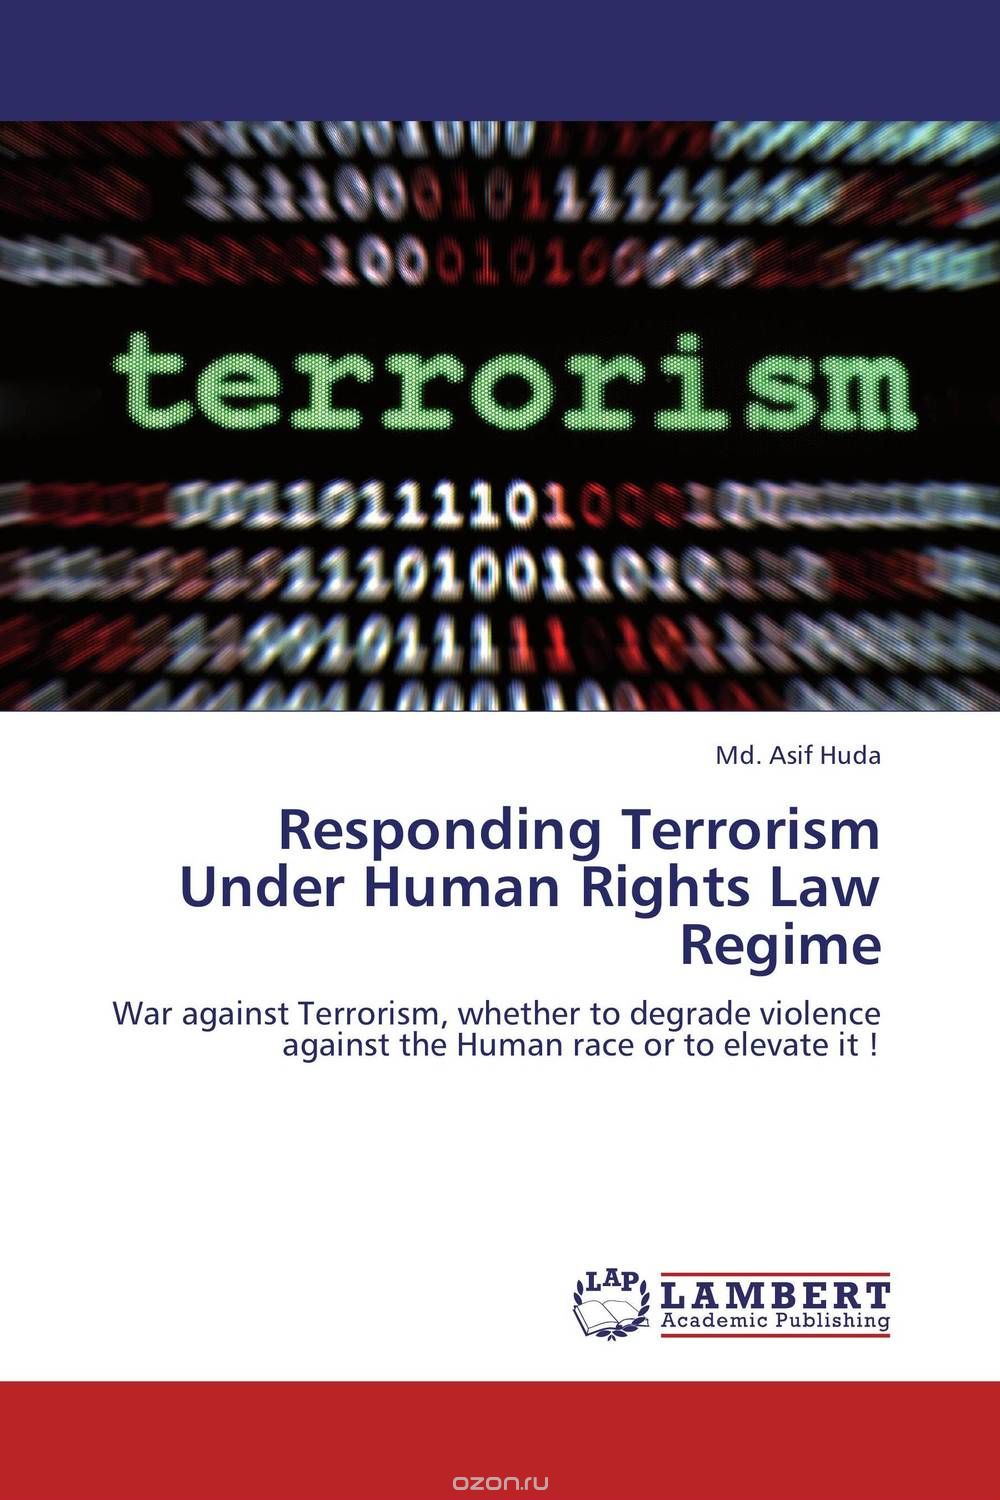 Скачать книгу "Responding Terrorism Under Human Rights Law Regime"